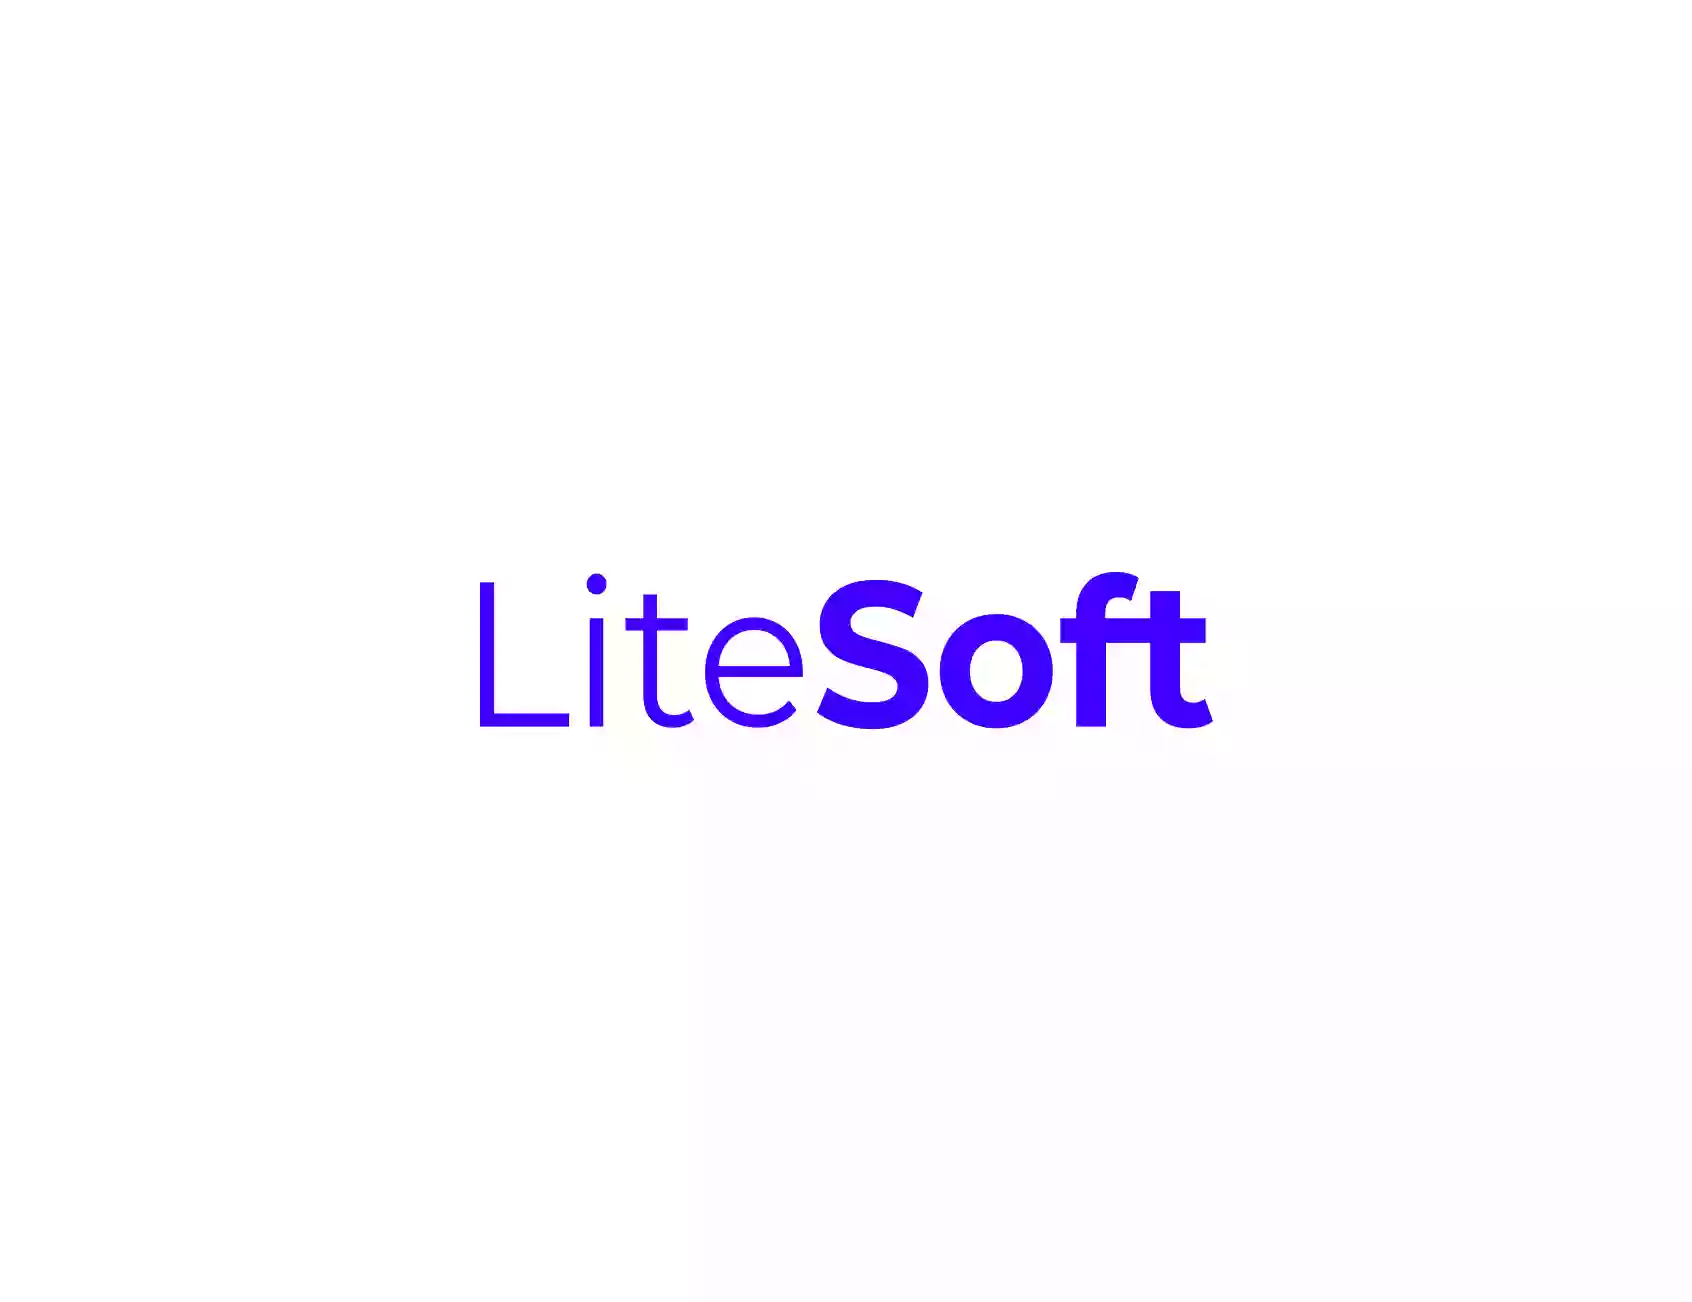 LiteSoft